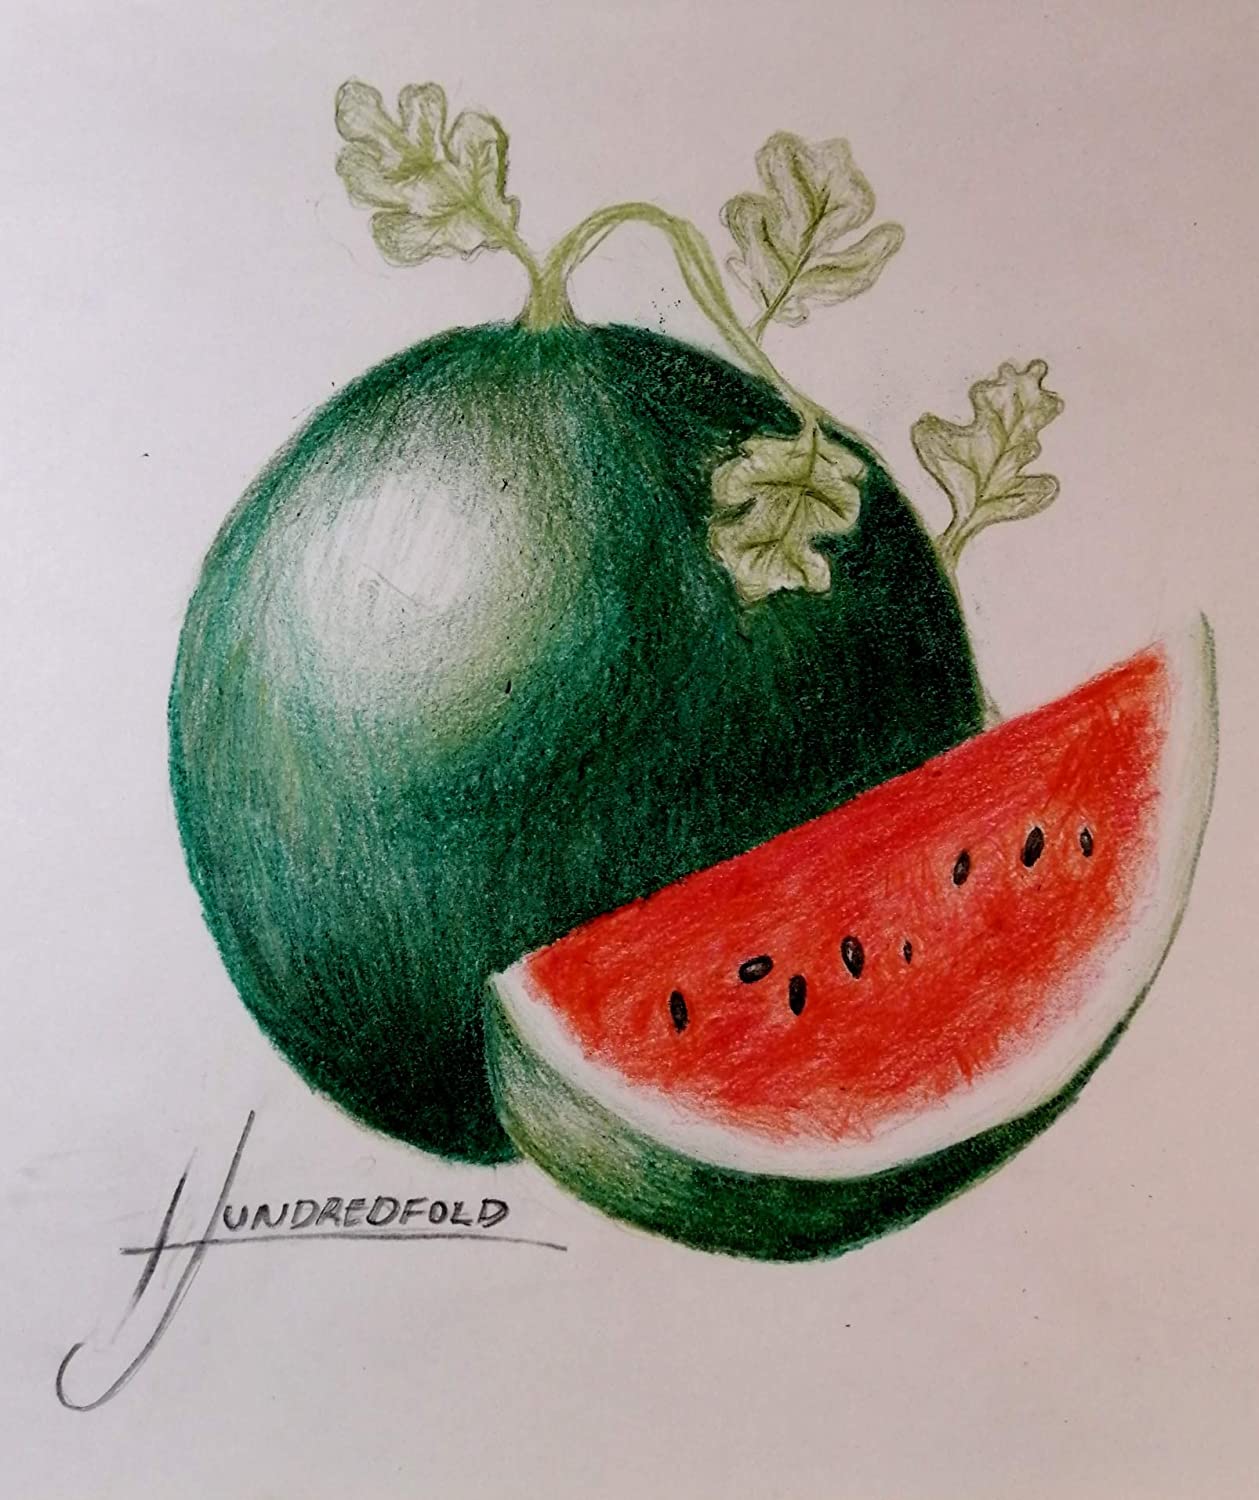 Hundredfold Organic Sugar Baby Watermelon 50 Seeds - Citrullus lanatus Heirloom Non-GMO Sweet Fruits